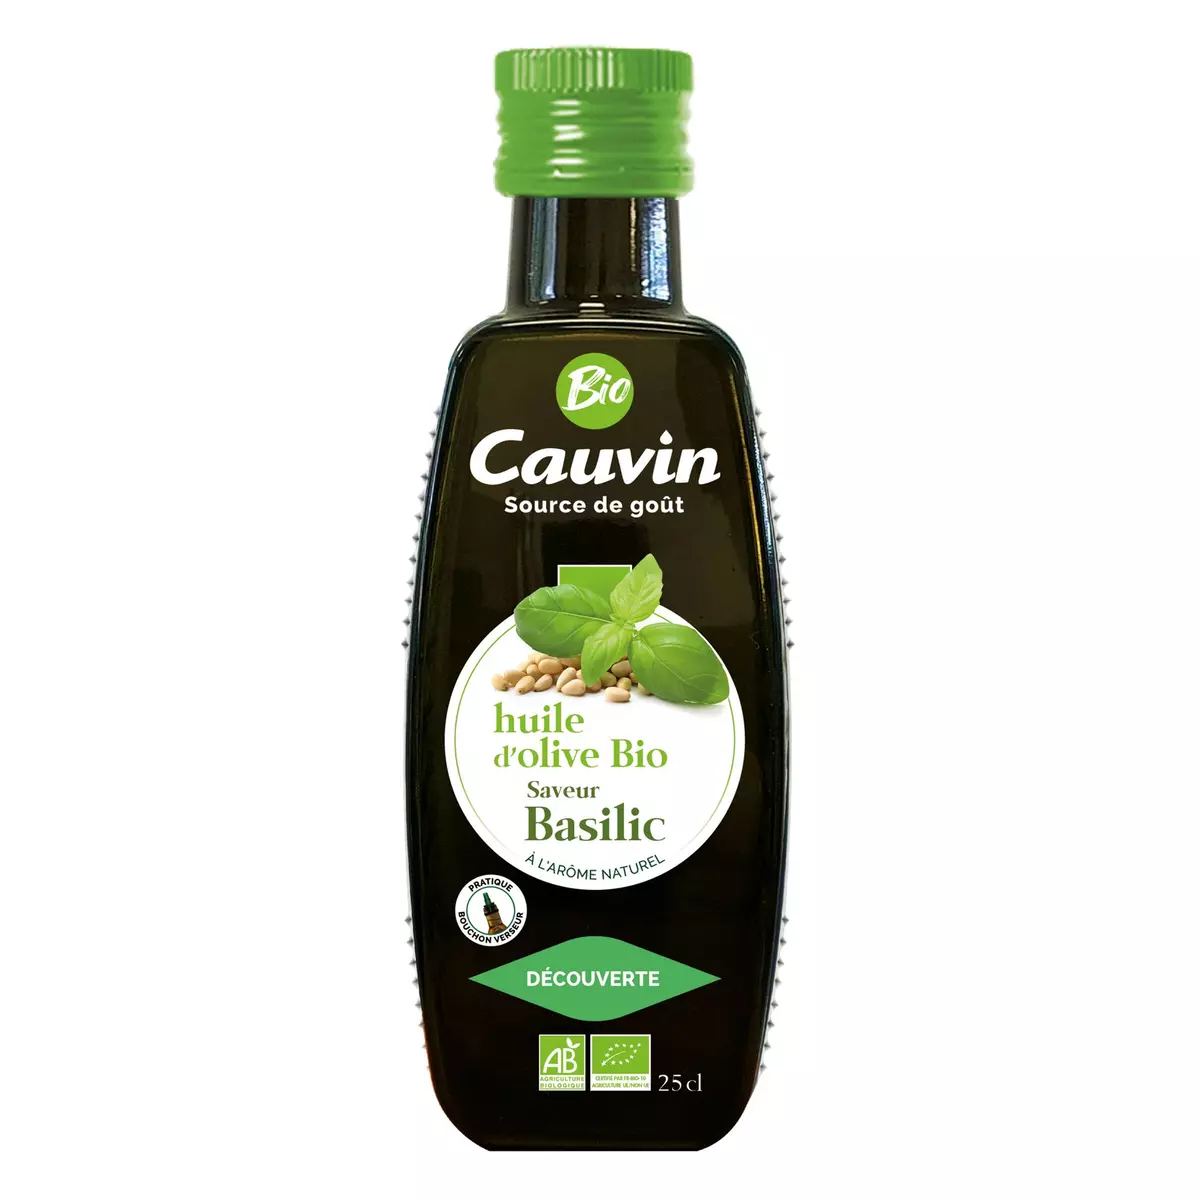 CAUVIN Huile d'olive bio saveur basilic 25cl